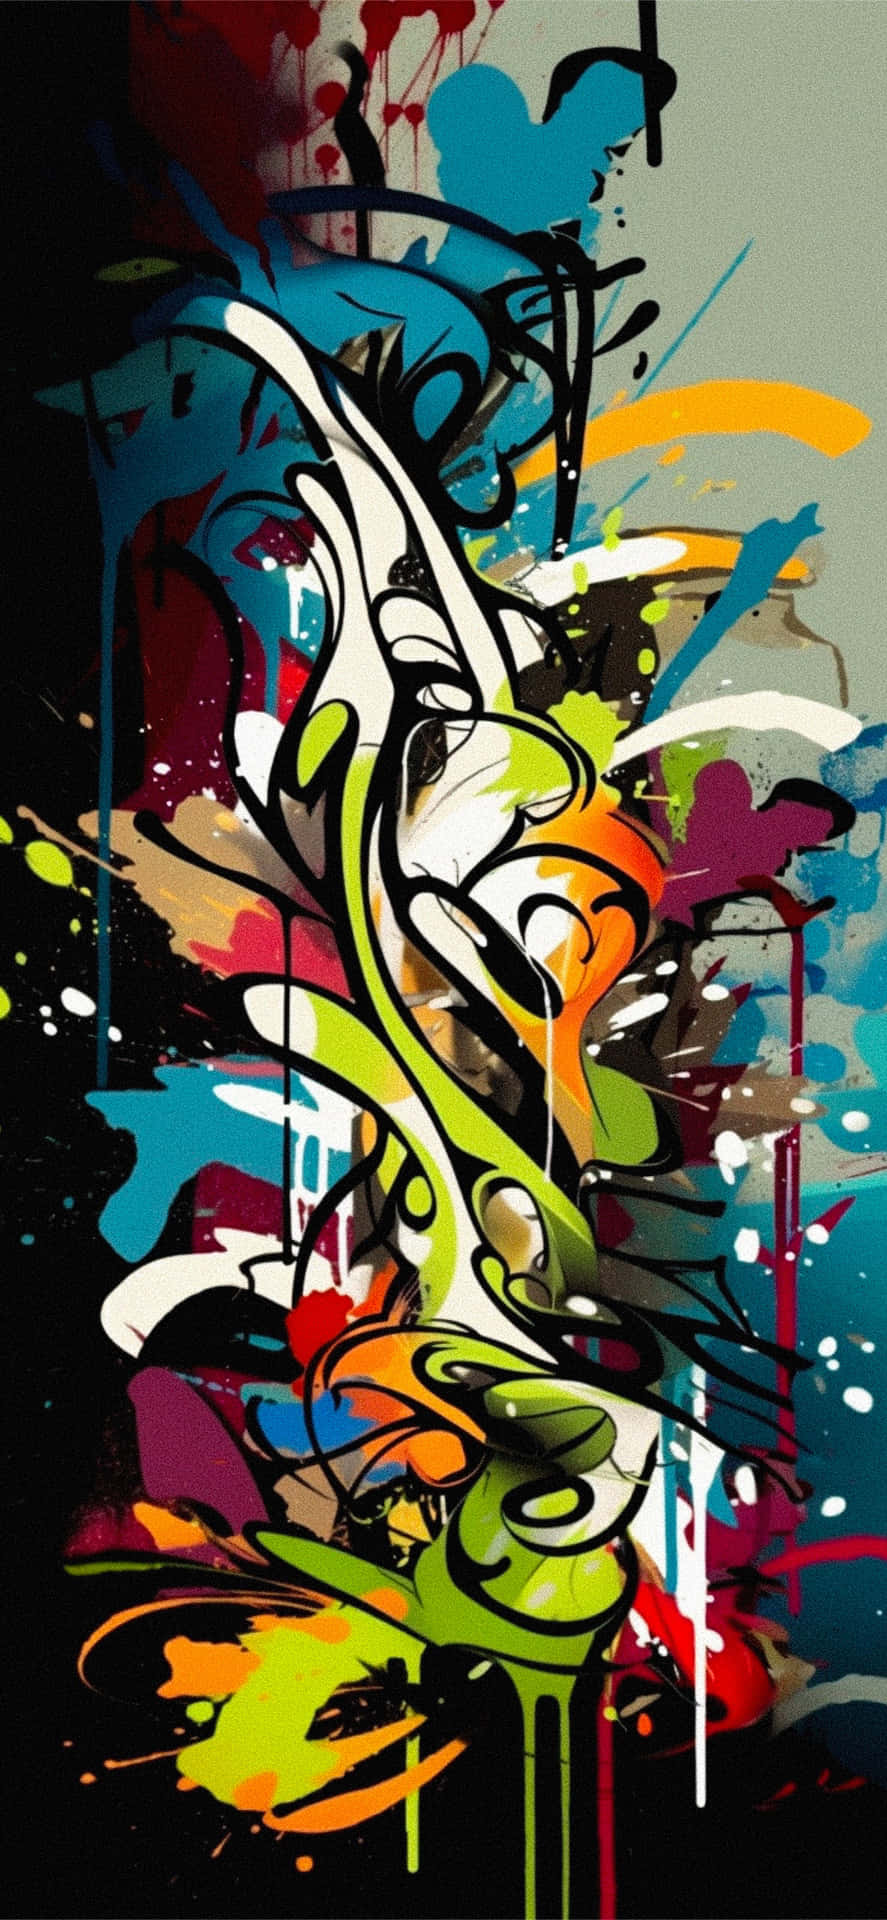 Abstract Graffiti Floral Explosion.jpg Wallpaper